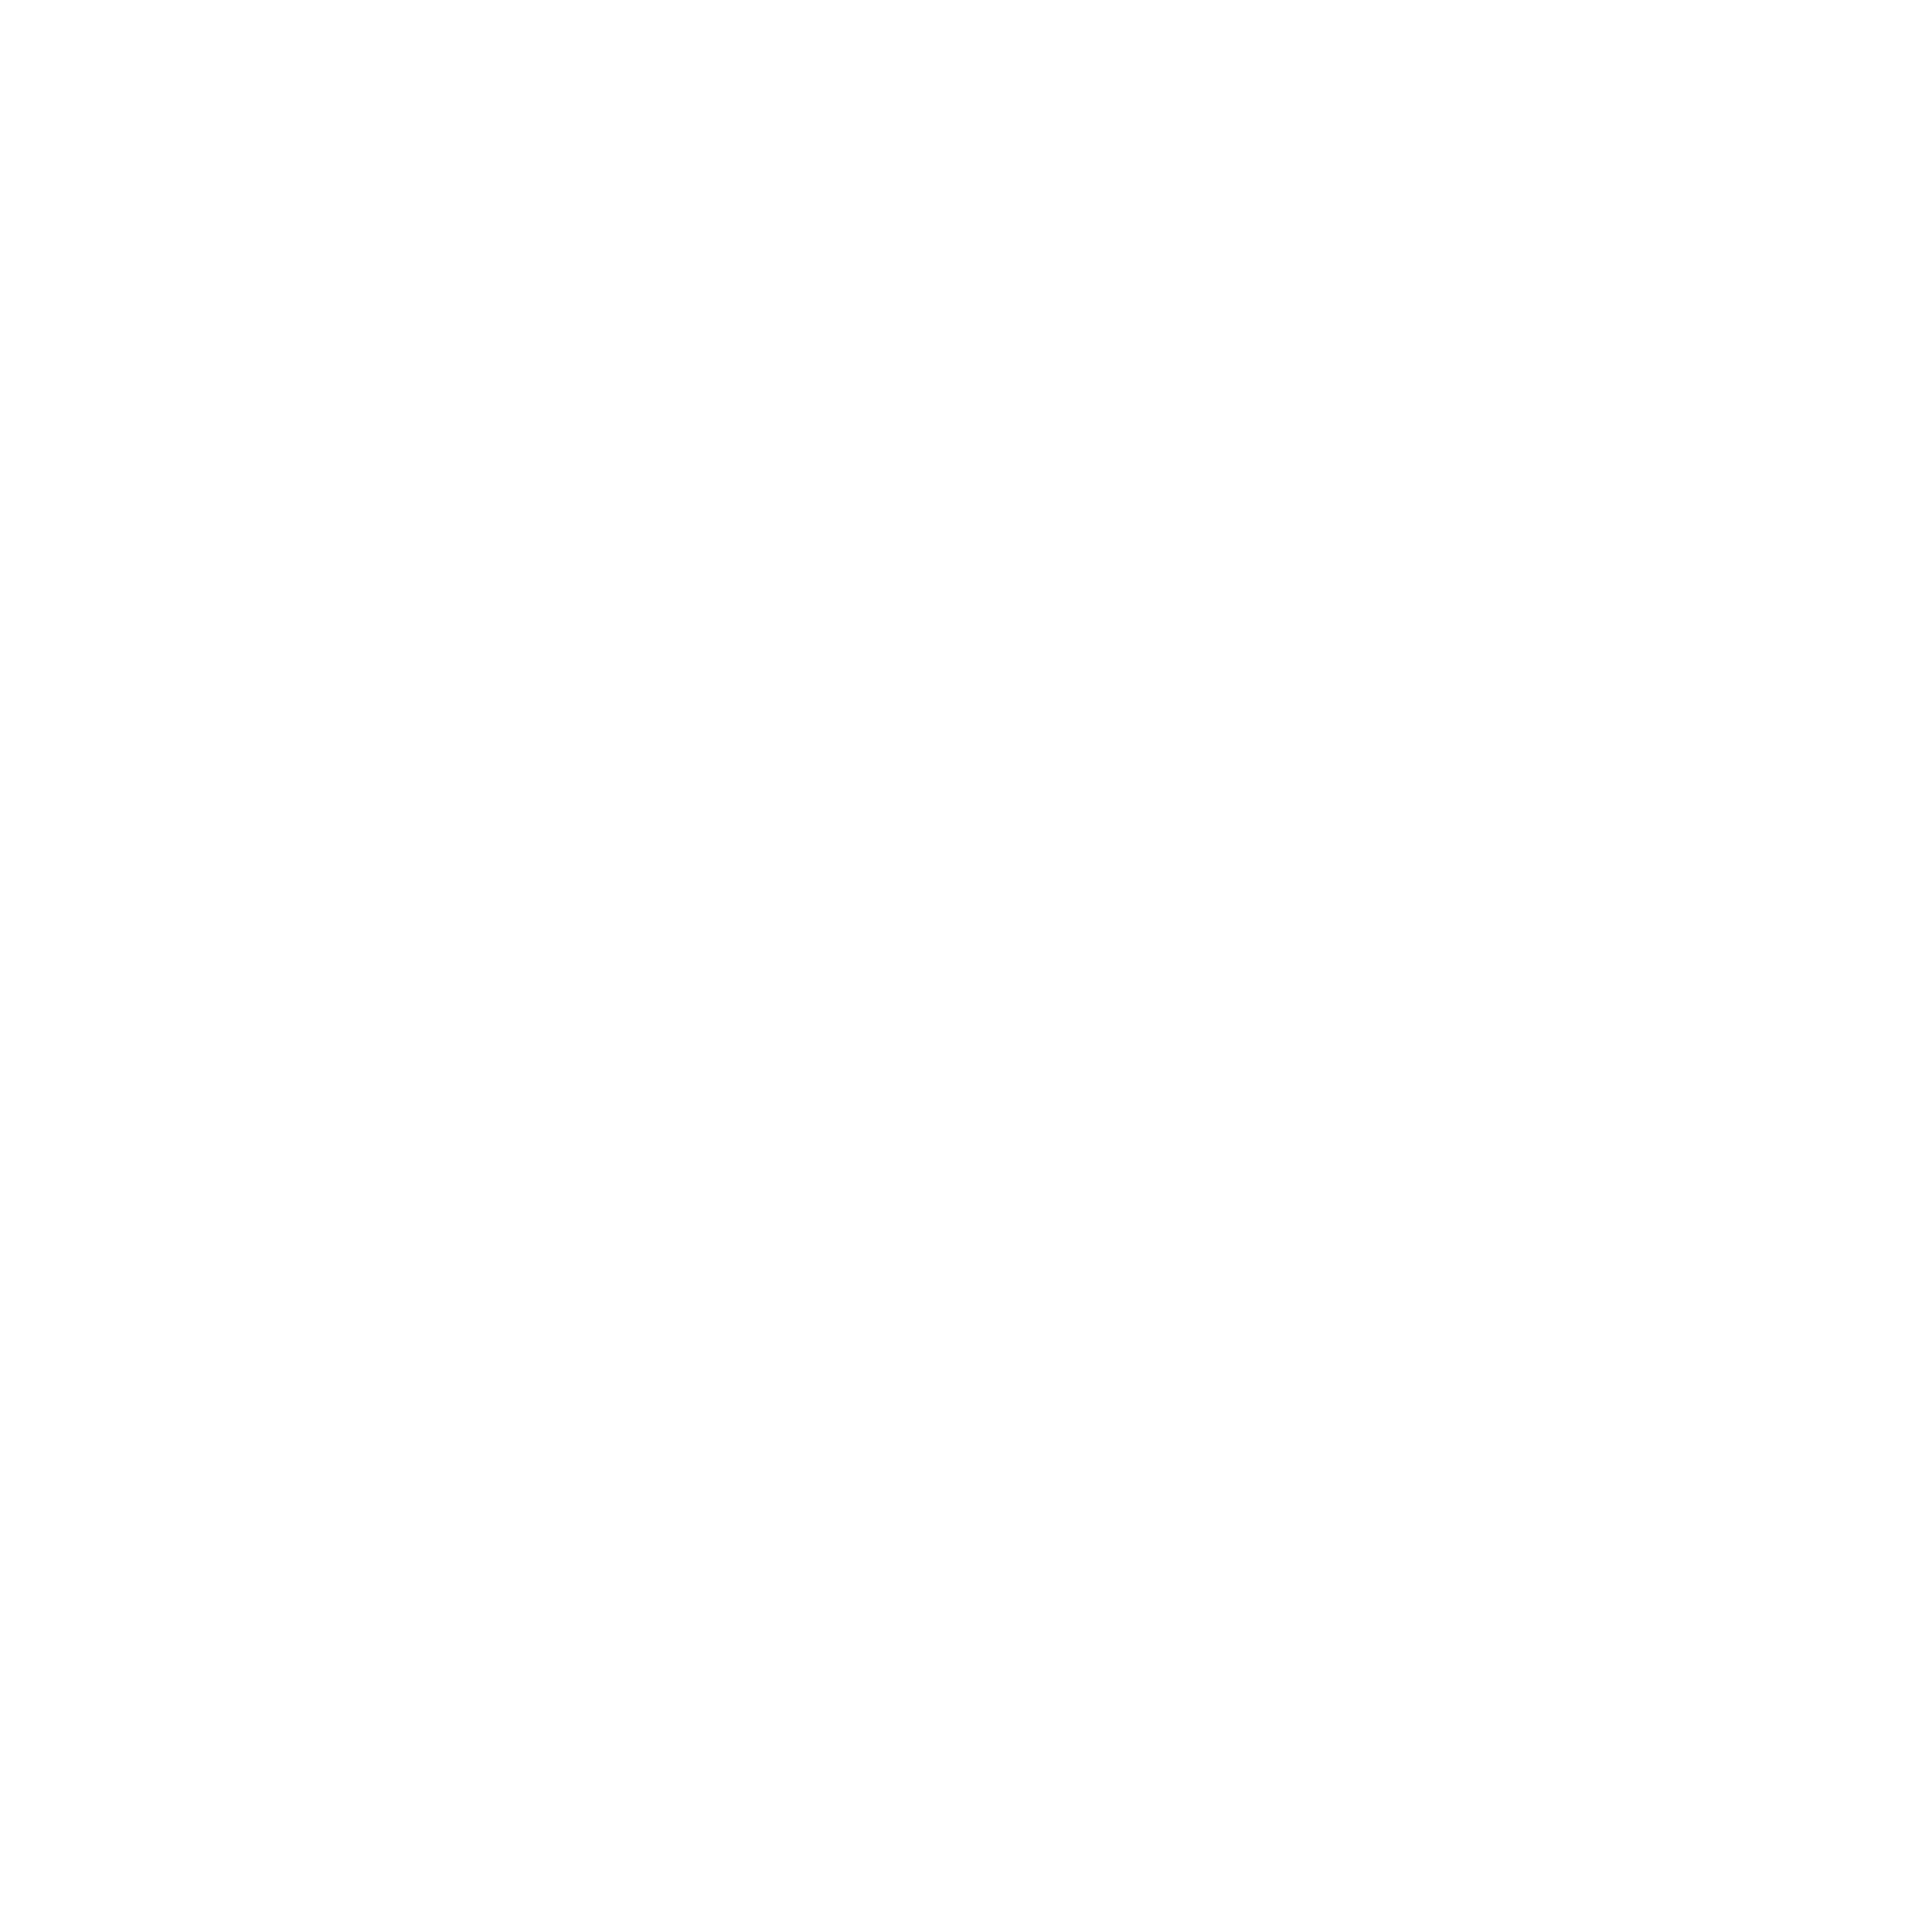 NTN Logo - NTN Logo PNG Transparent & SVG Vector - Freebie Supply